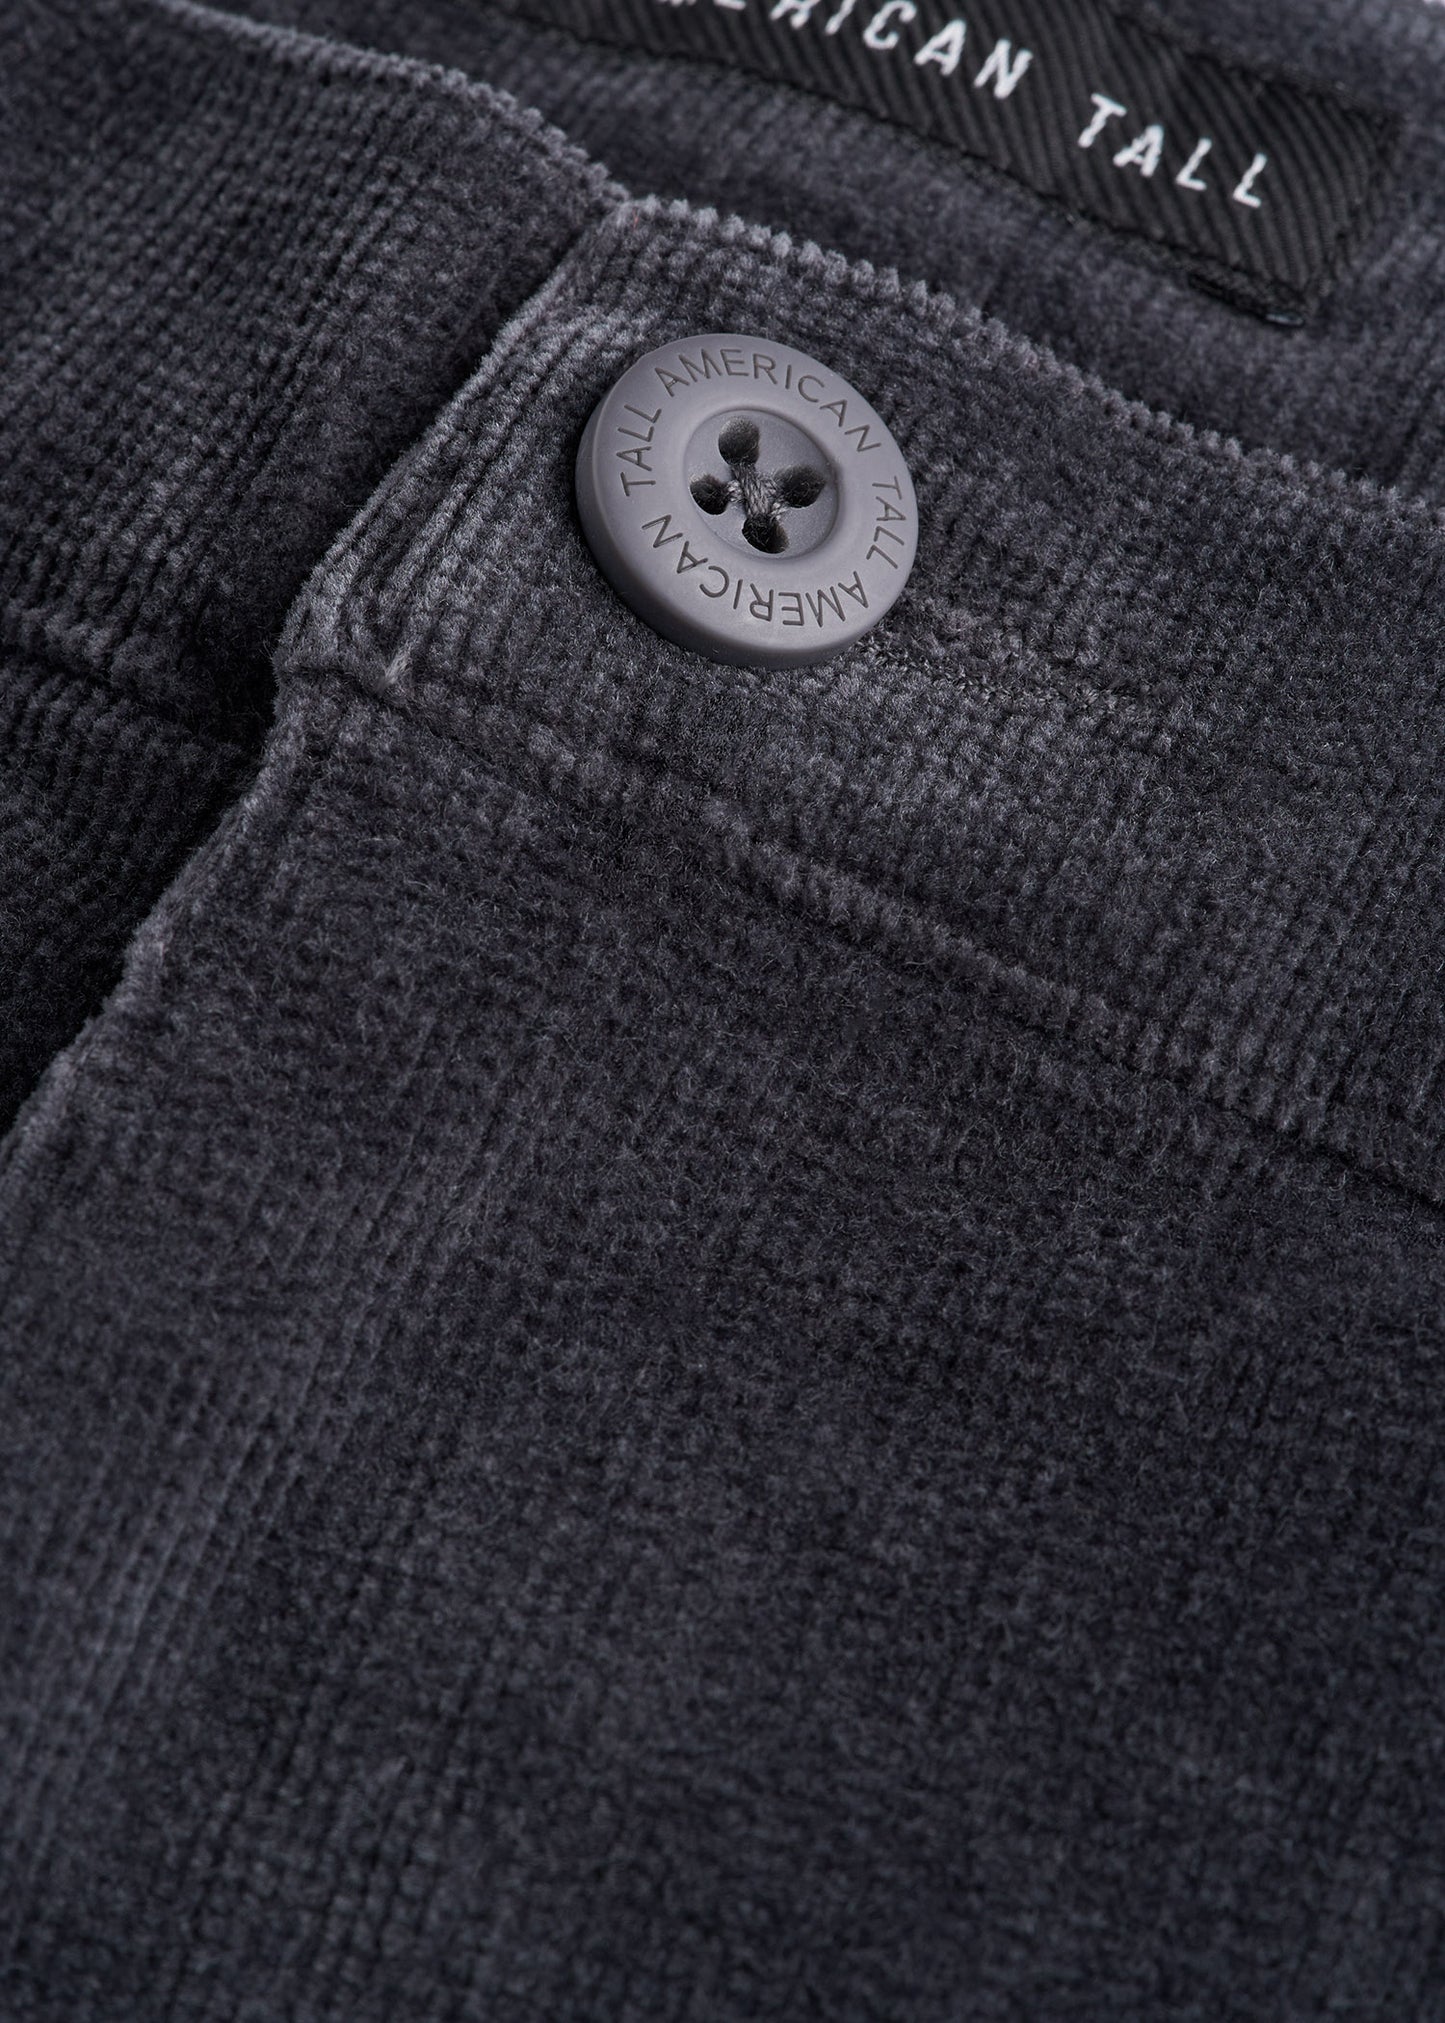 New Look cord pants in light gray | ASOS